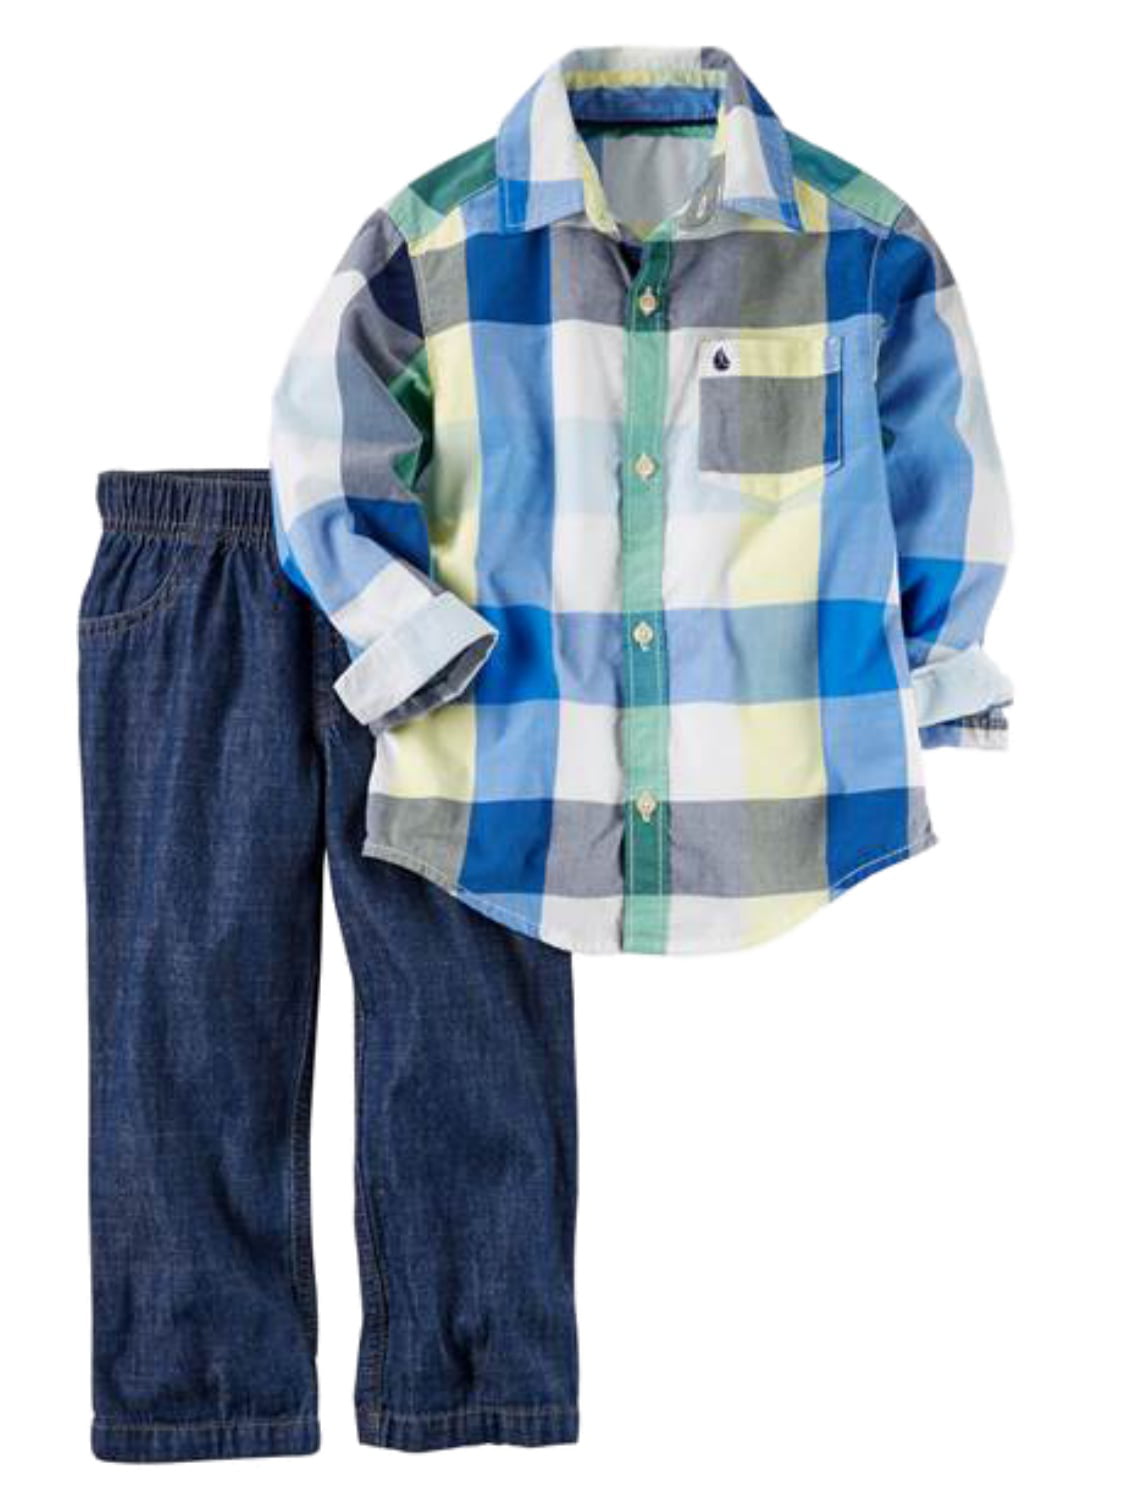 18 Months Baby Boy Carter's Checkered Button-Down Blue Shirt & Pants Set Size 